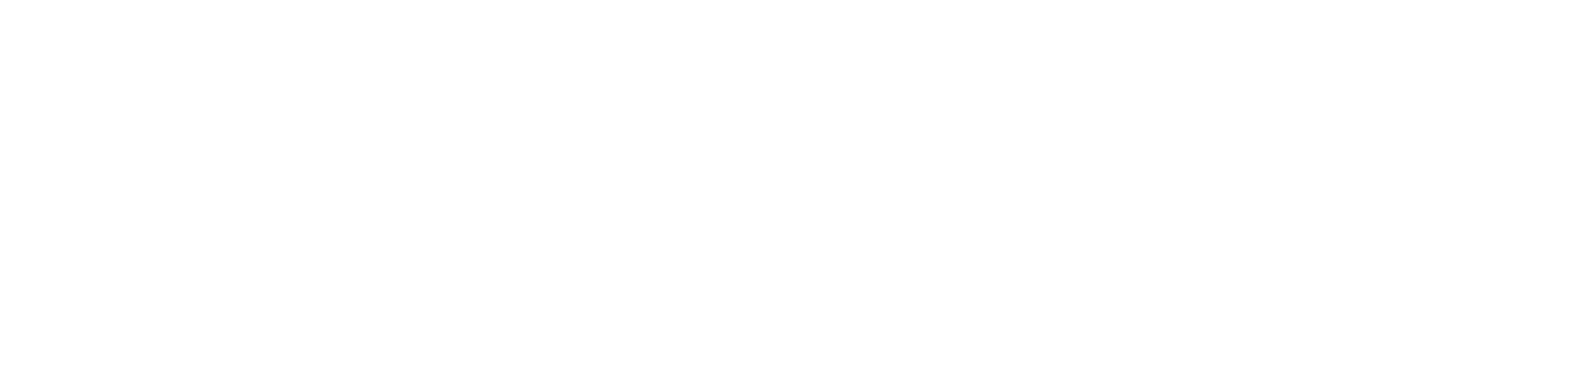 Omnicell
 logo large for dark backgrounds (transparent PNG)